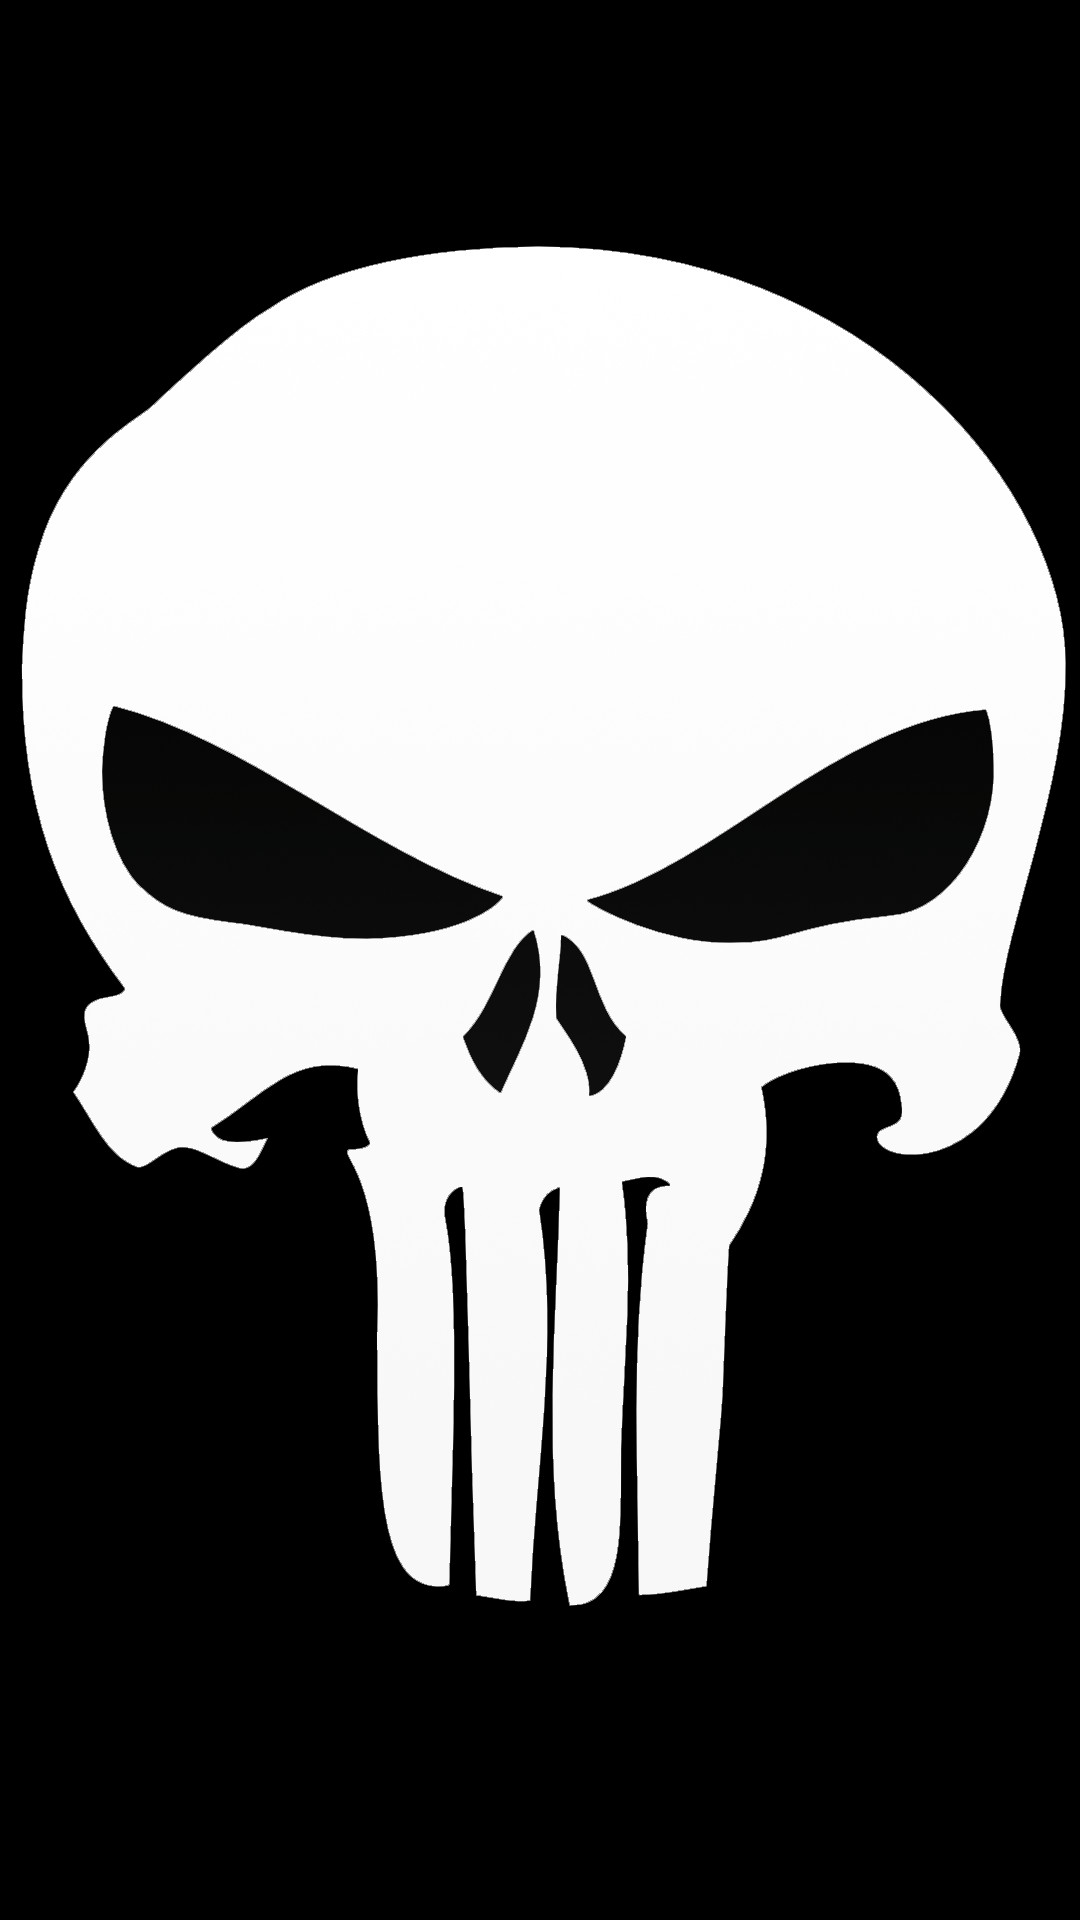 1080x1920 1131x707 The Punisher Logo Wallpaper - WallpaperSafari">